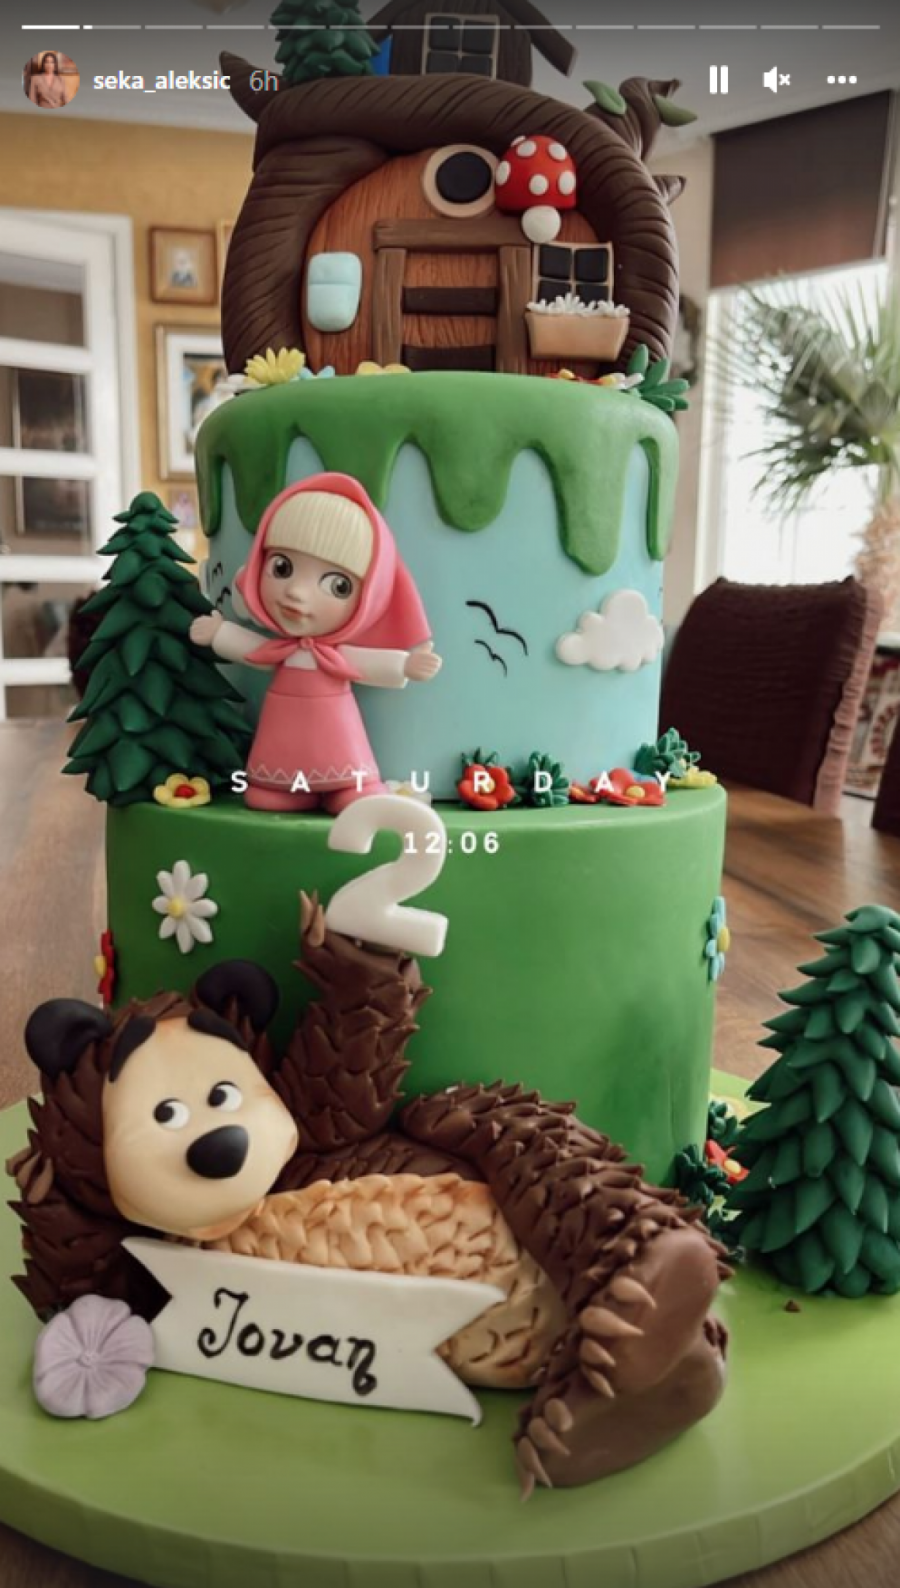 DANAS JE ZA SEKU POSEBAN DAN! Pevačica priredila slavlje povodom 2. rođendana njenog sina, a specijalna torta oduševila sve!